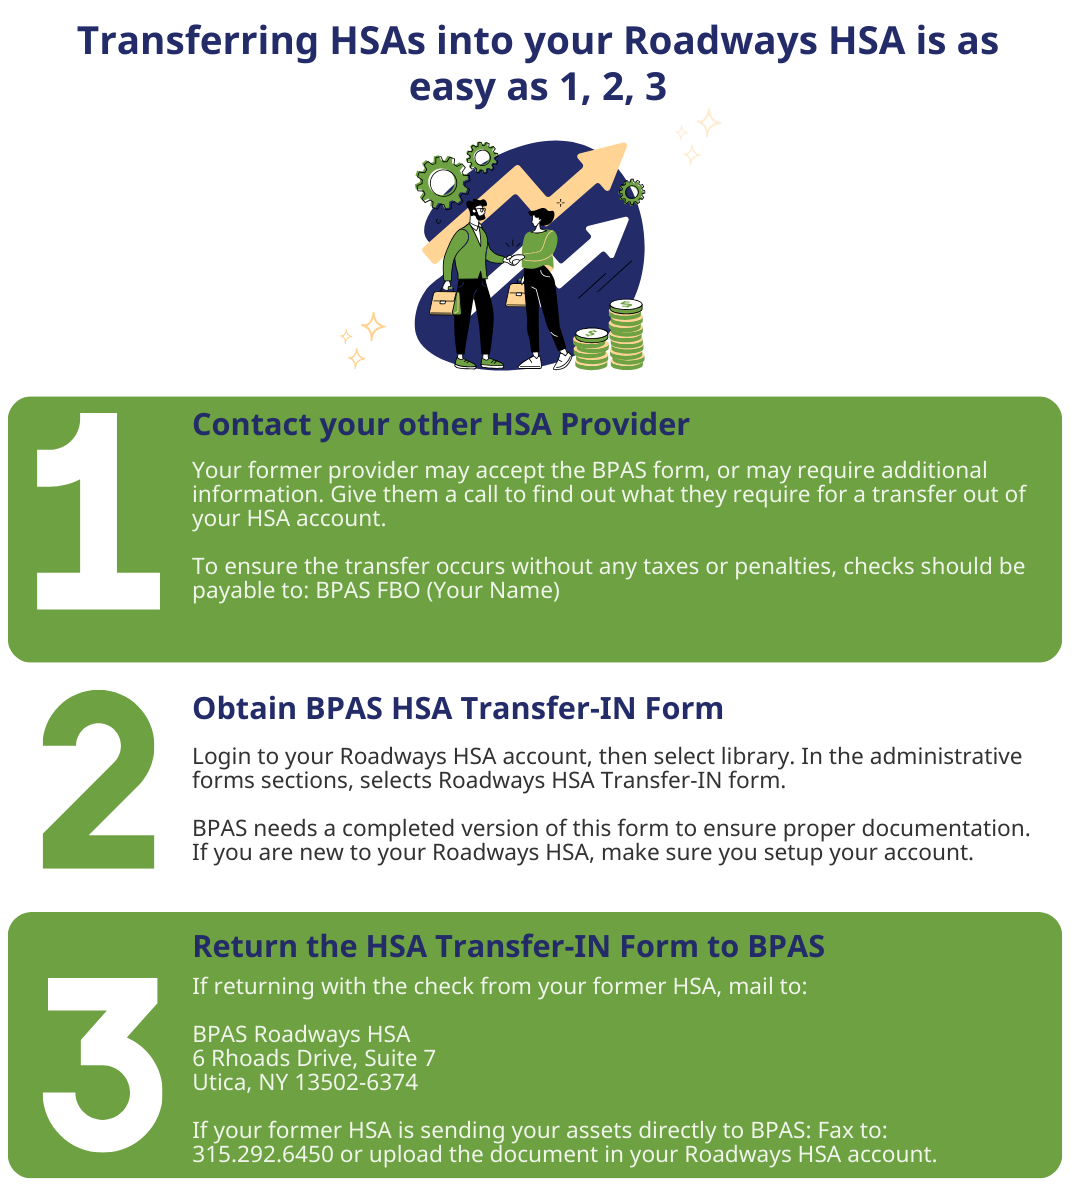 Transferring an HSA into your Roadways HSA - BPAS University